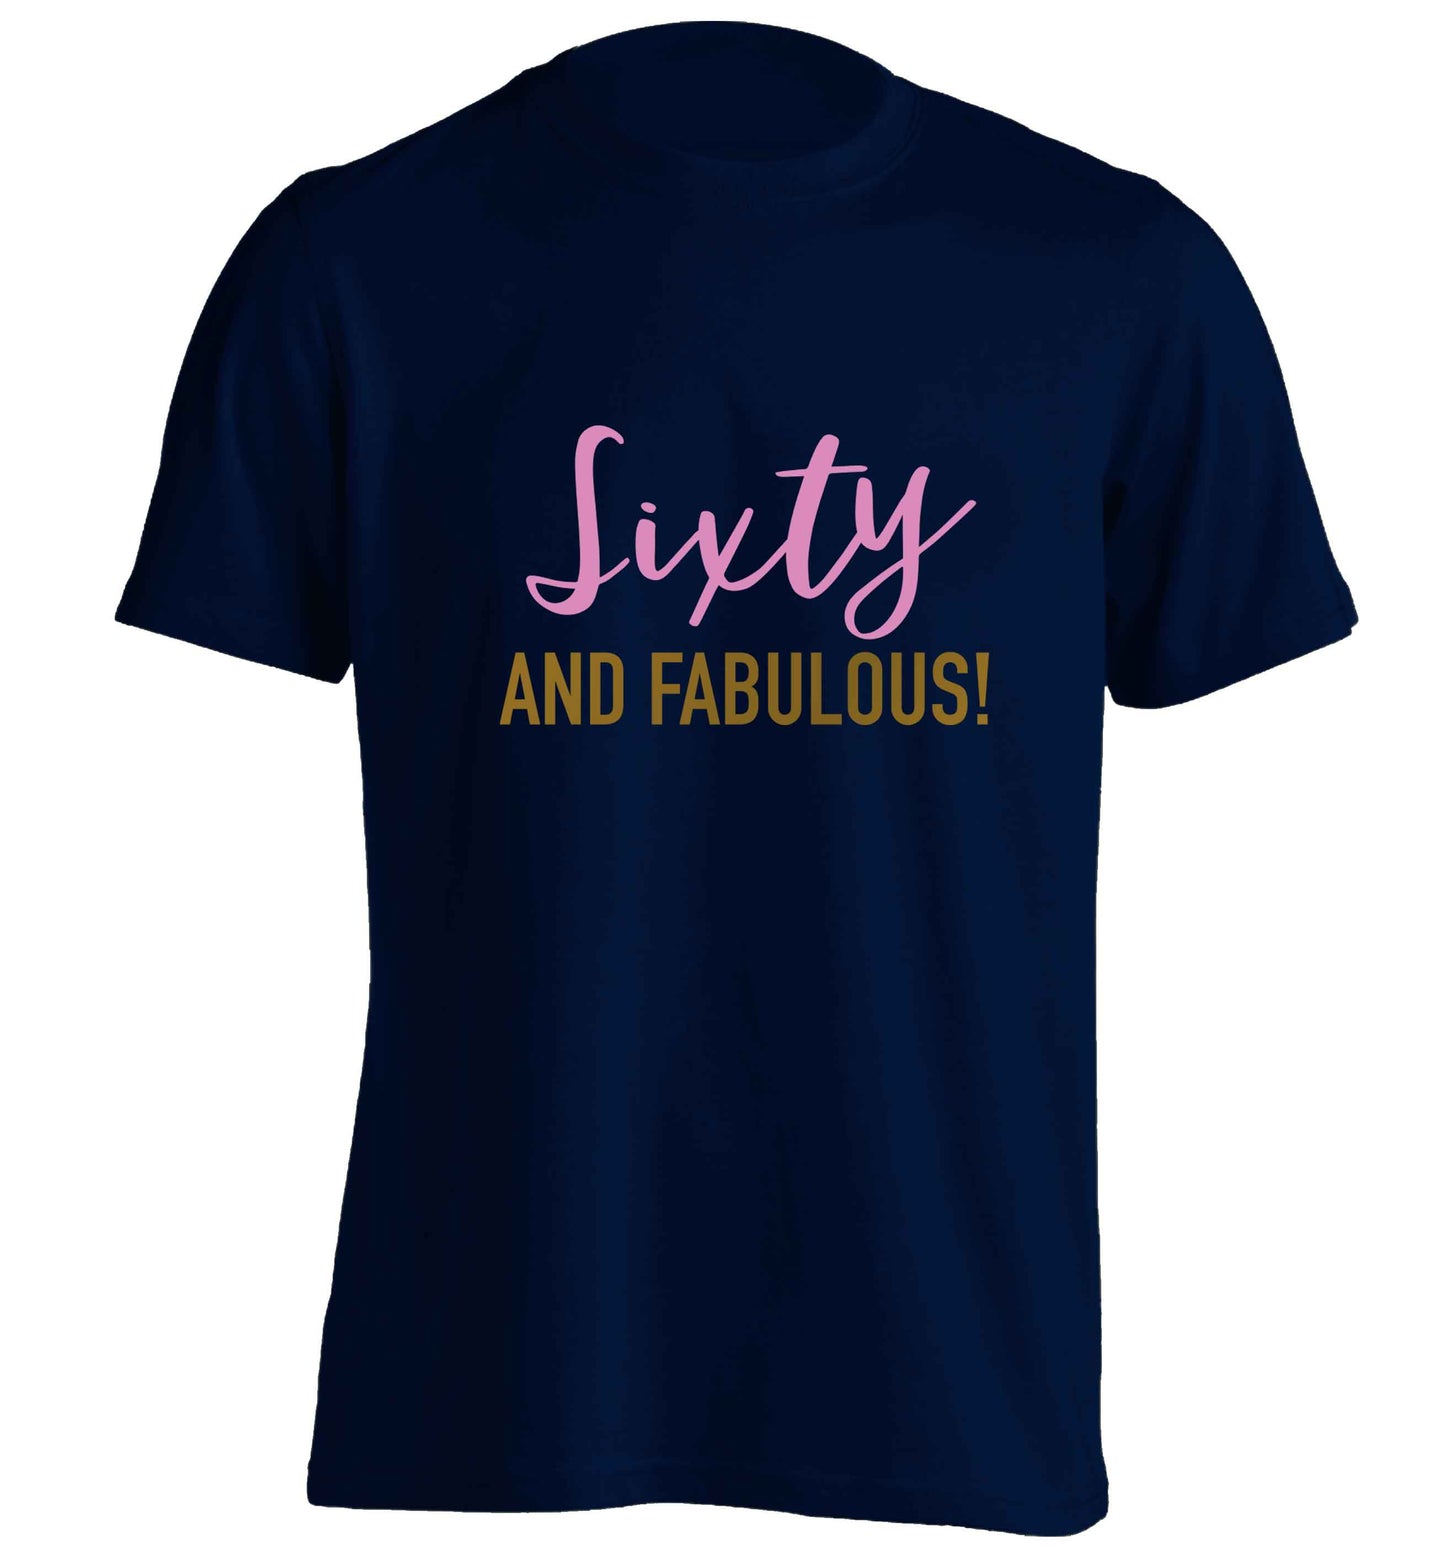 Sixty and fabulous adults unisex navy Tshirt 2XL